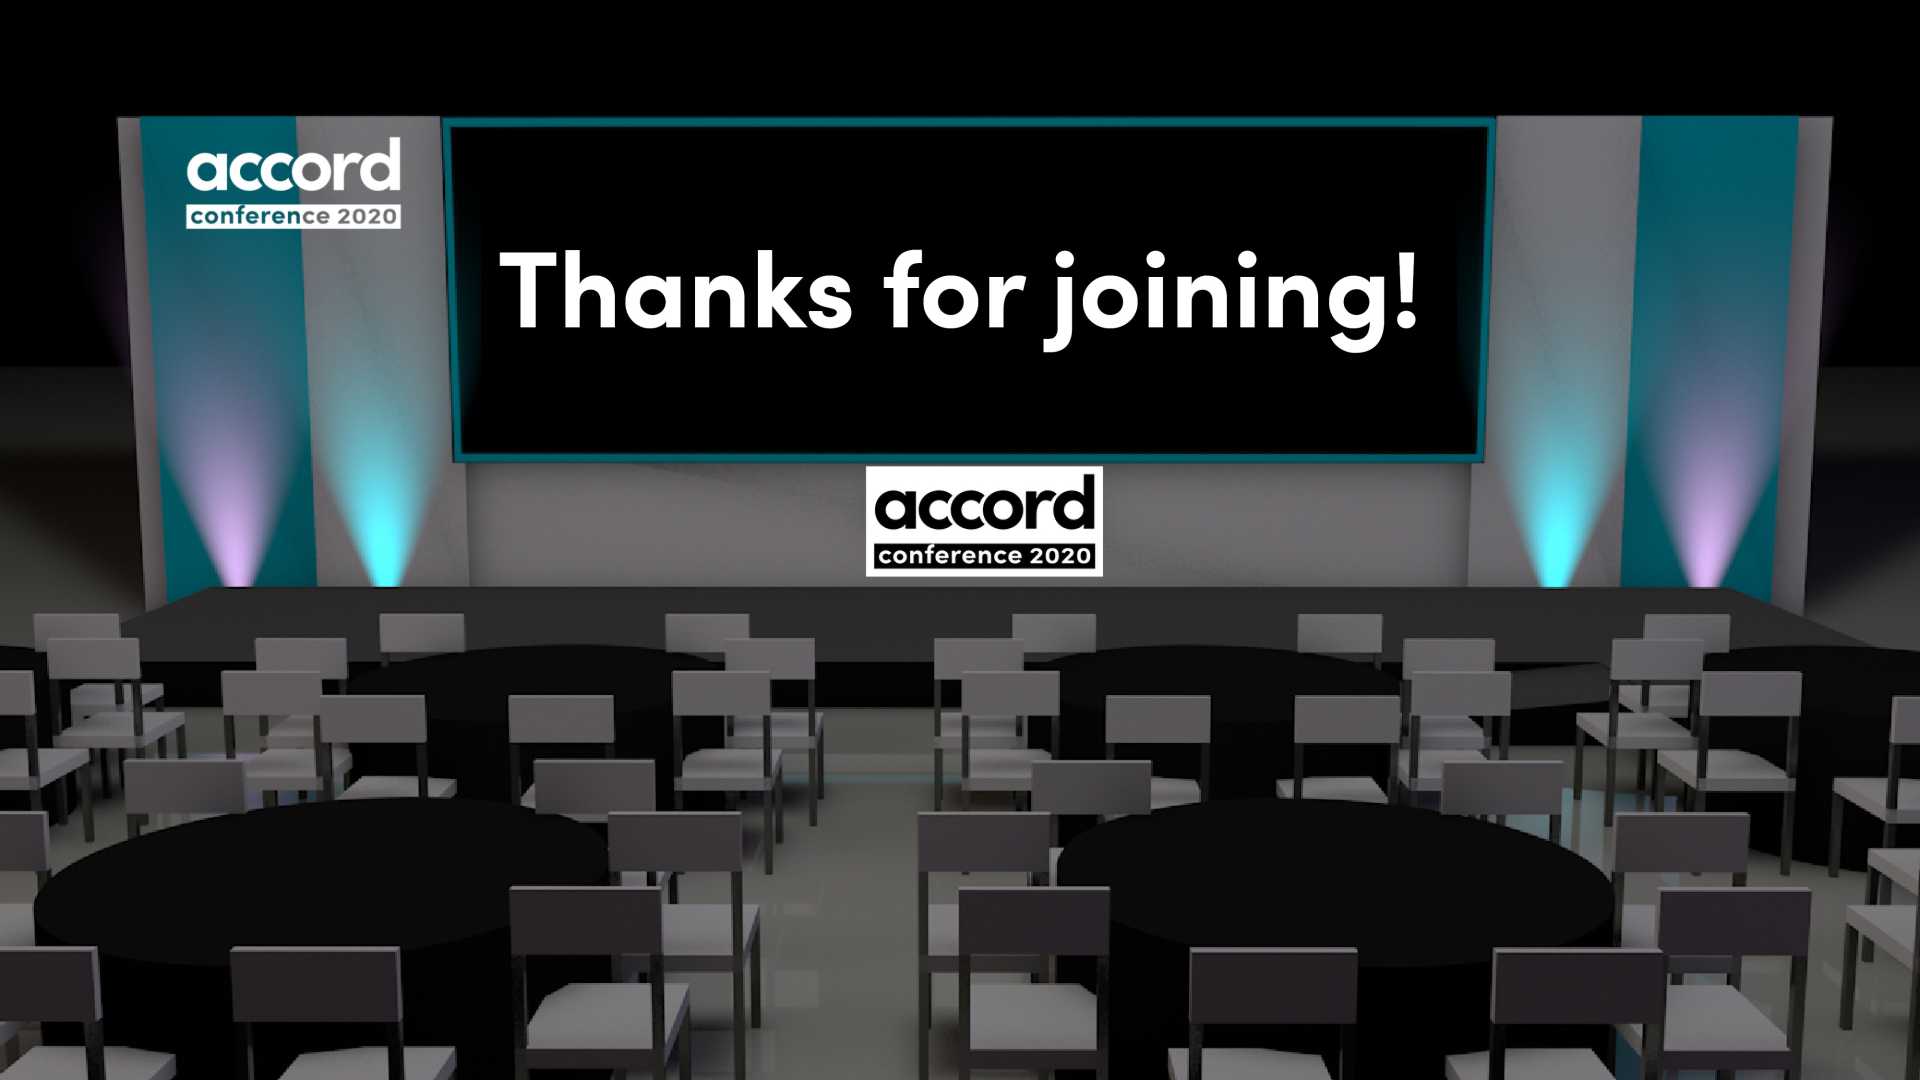 Accord virtual conference 2020